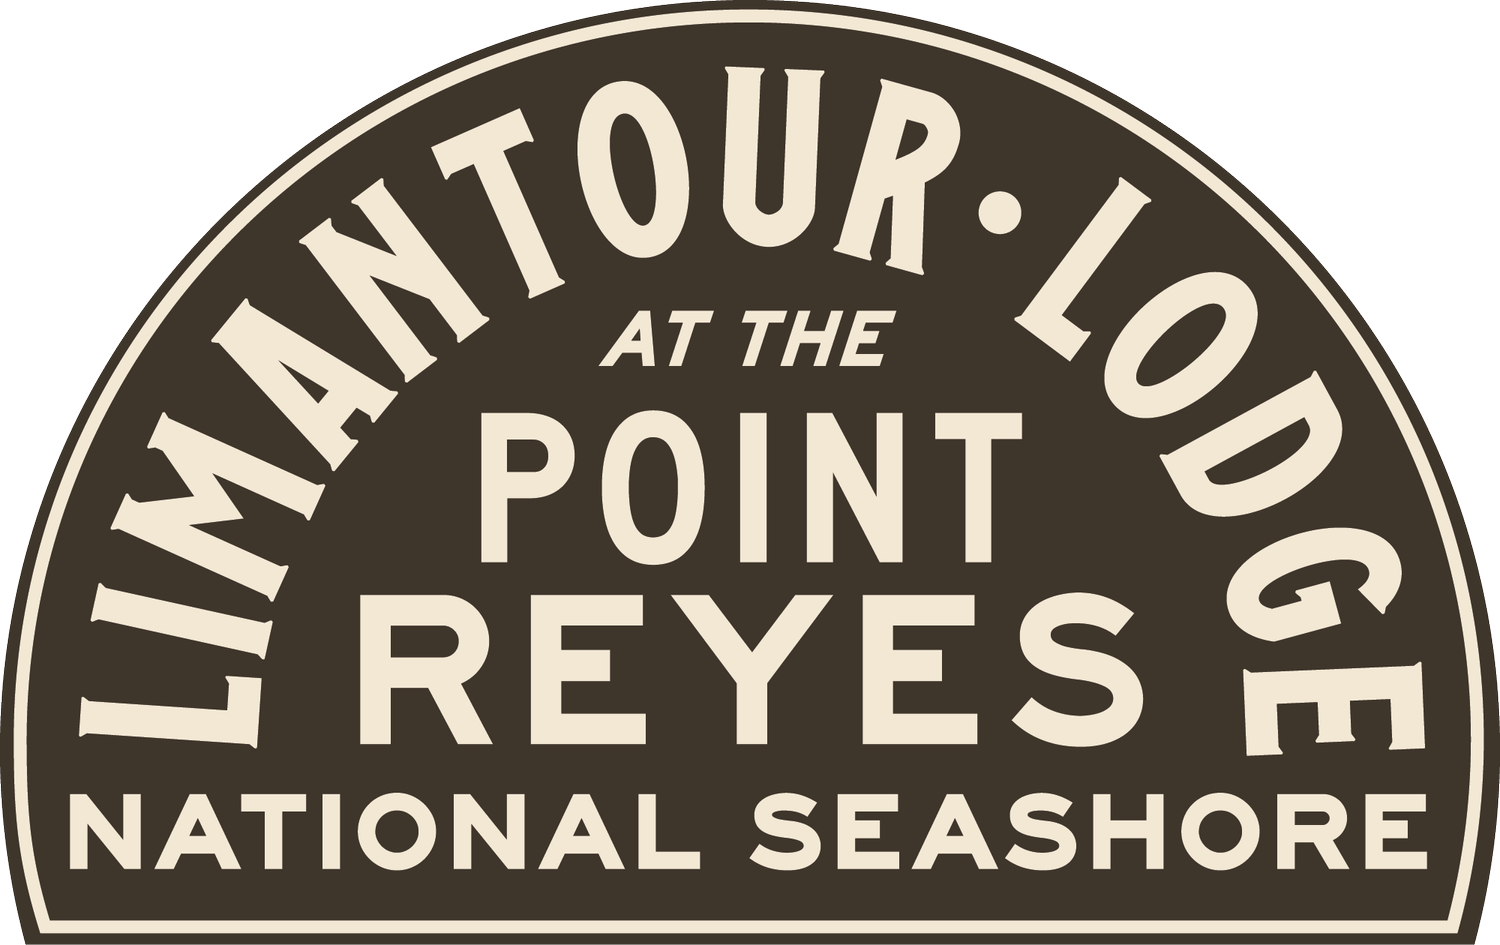 Limantour Lodge at Point Reyes National Seashore